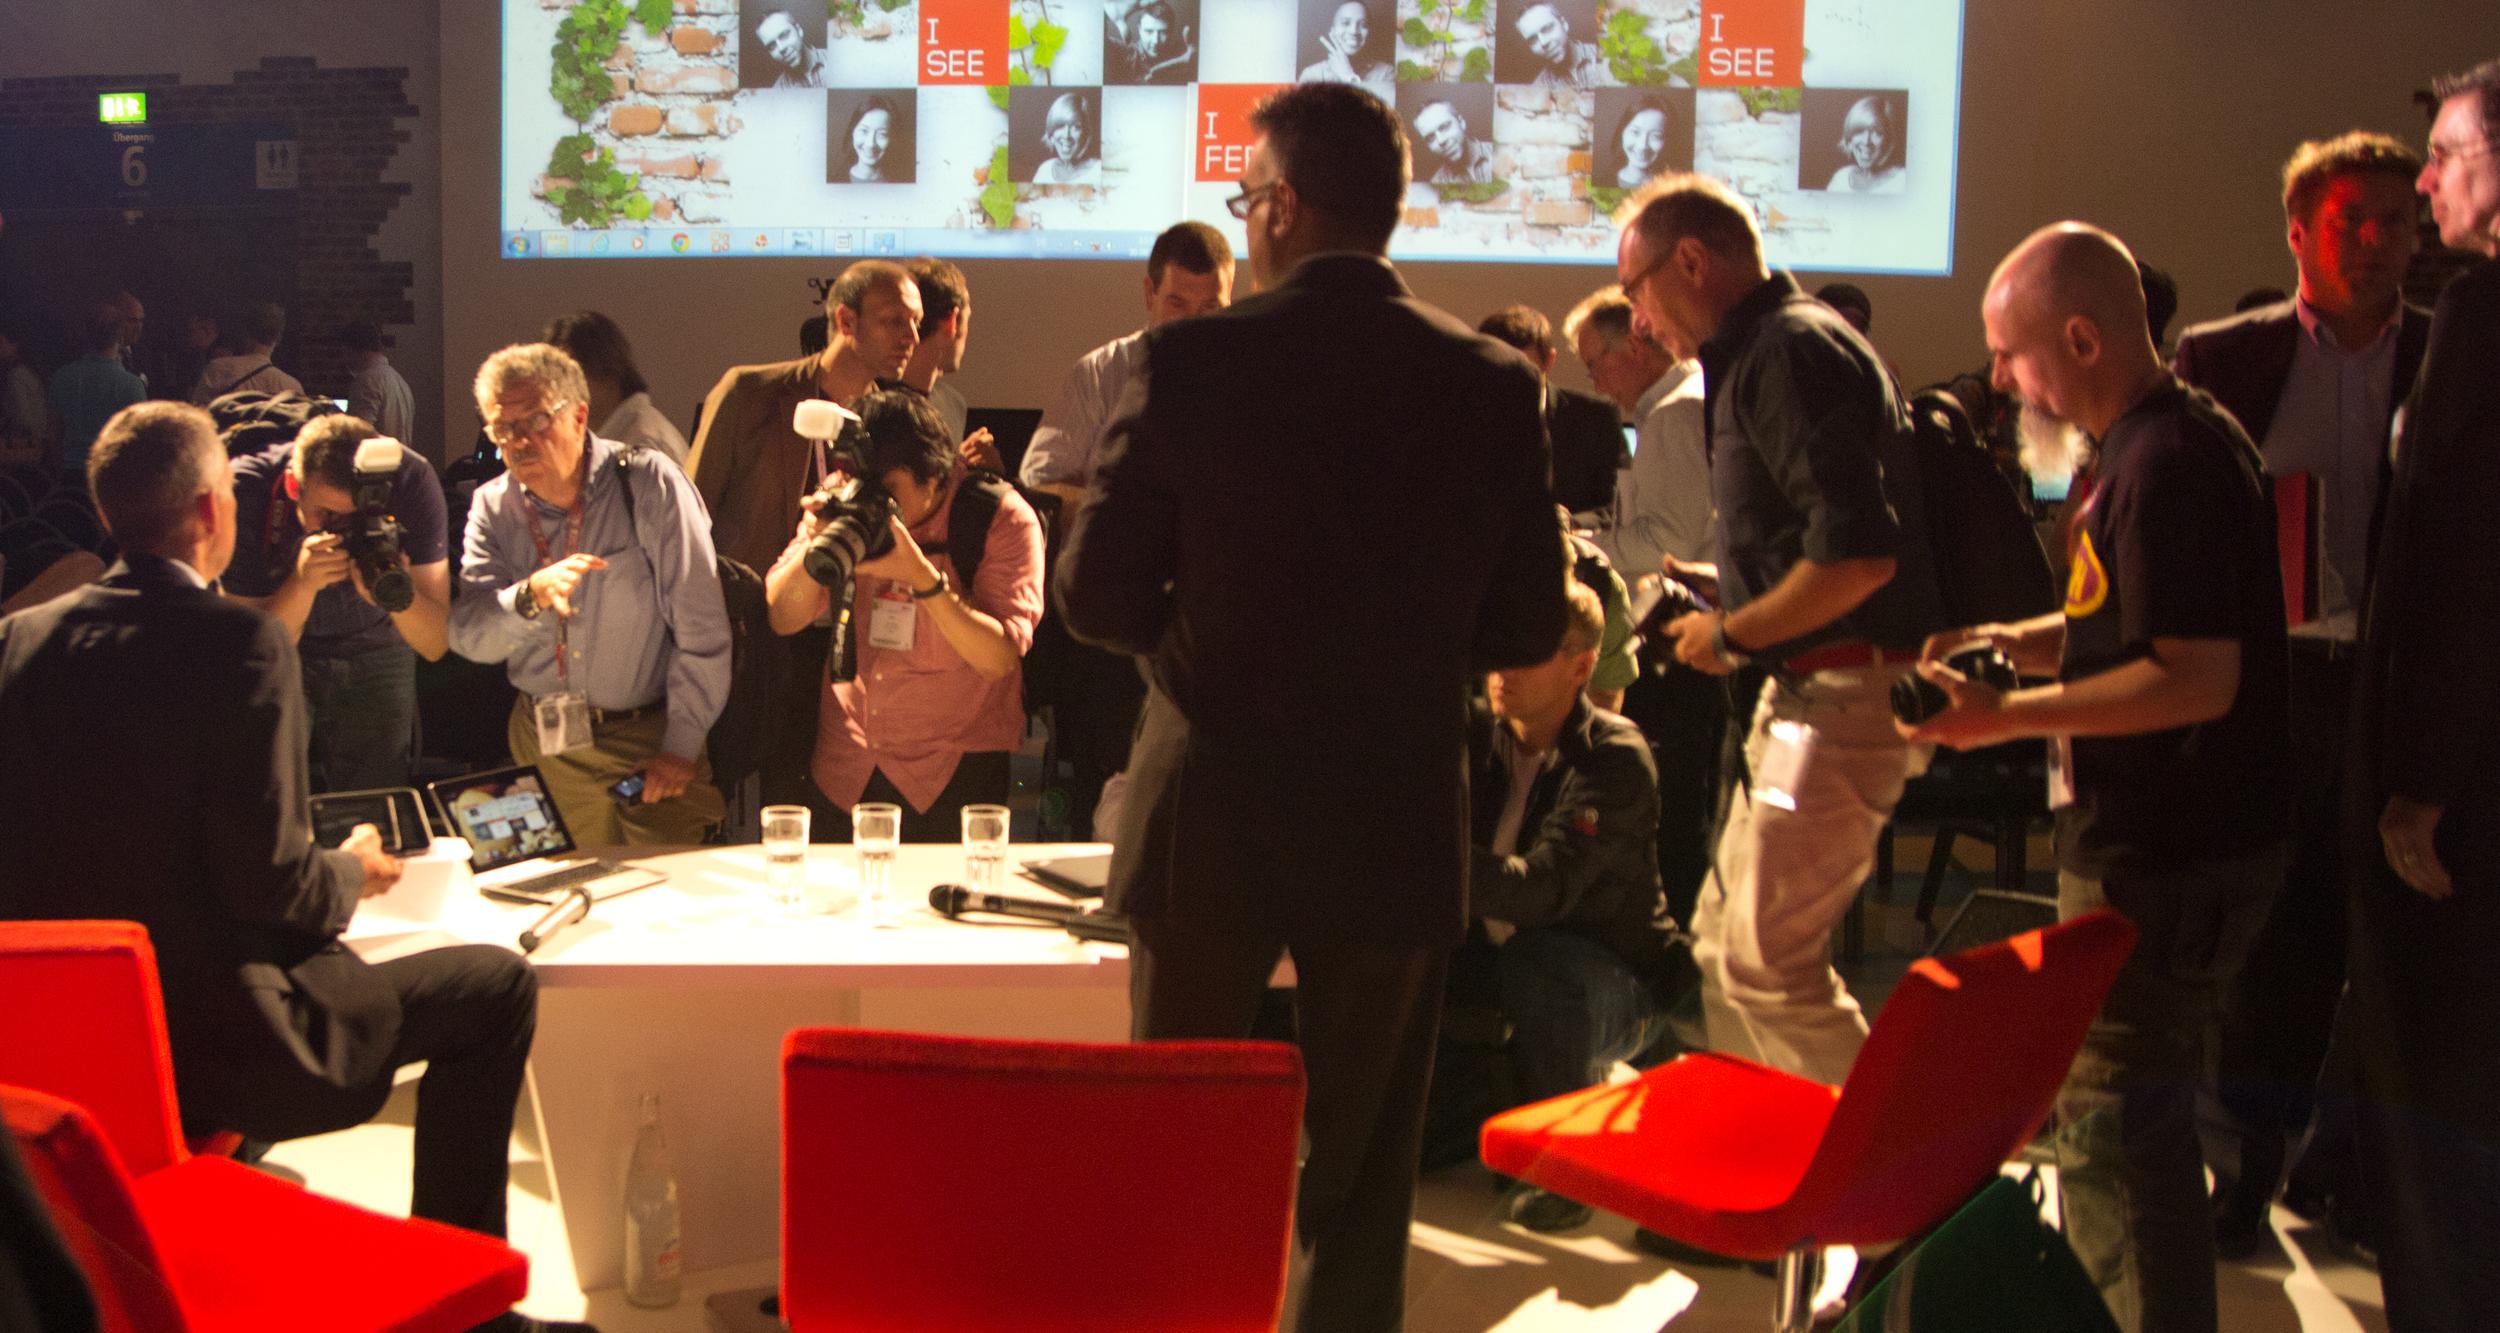 Lenovos pressekonferanse er over, og ivrige fotografer knipser i vei.